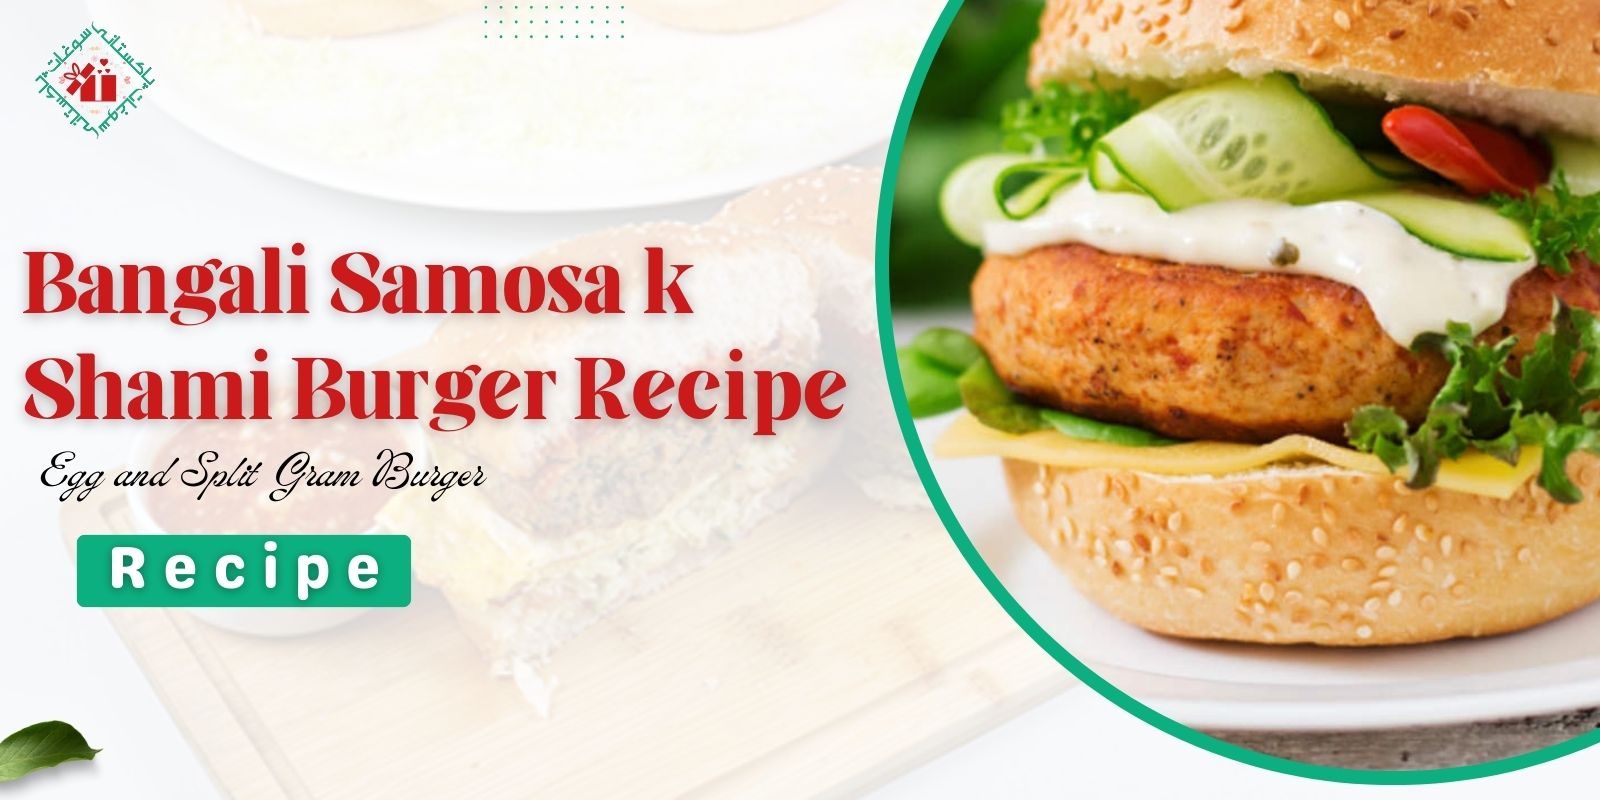 Shami Burger Recipe